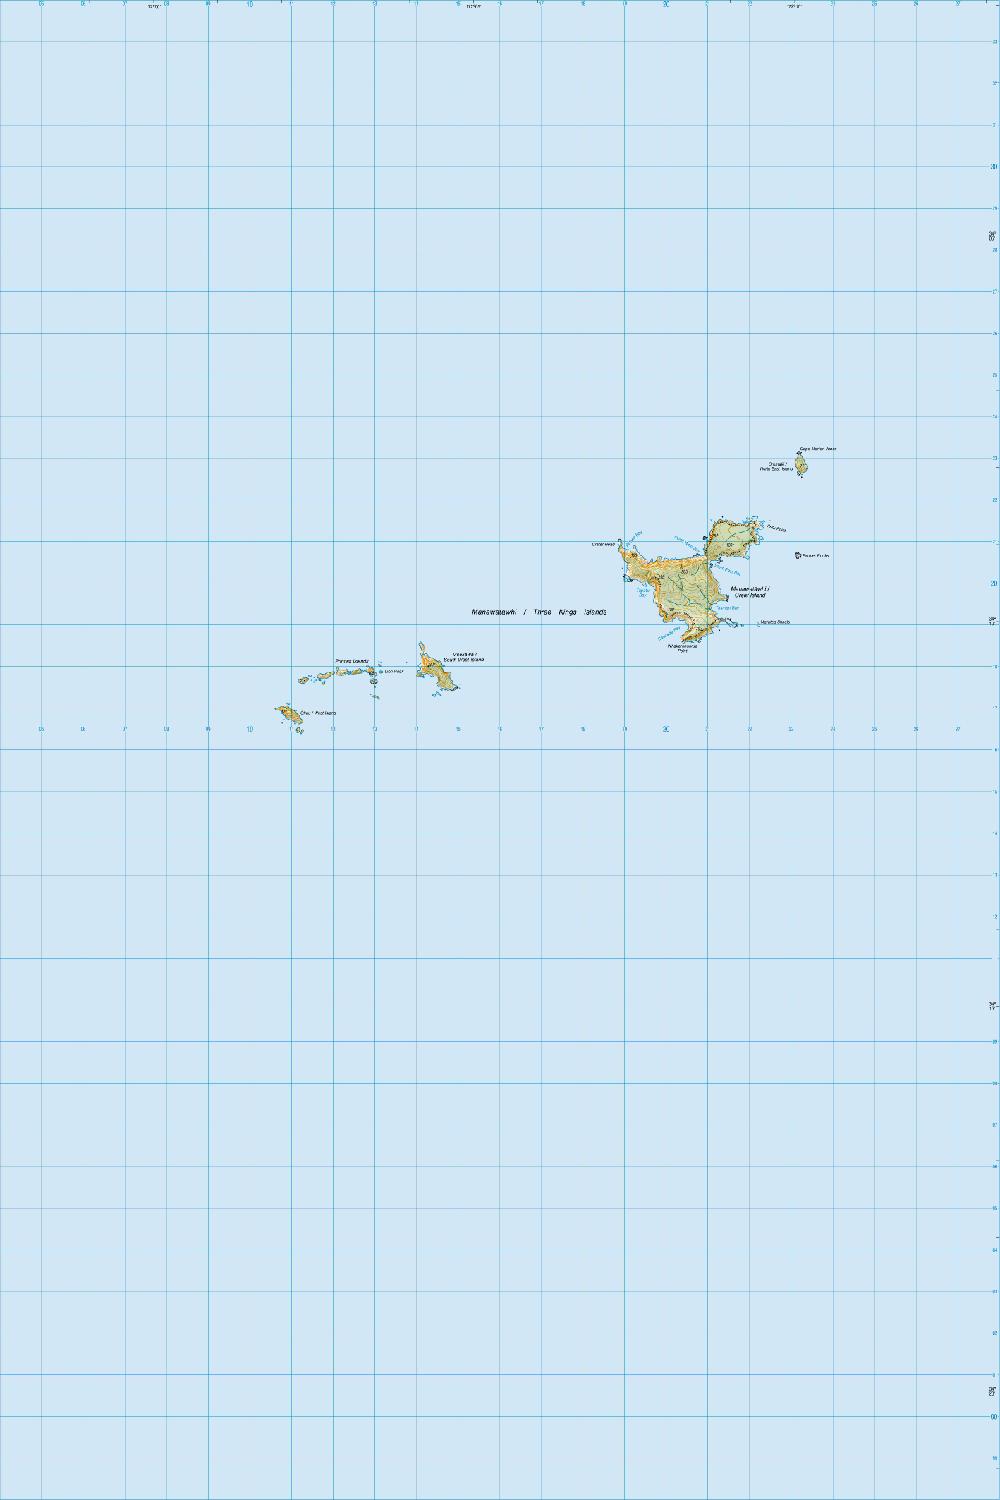 Topo map of Manawatāwhi / Three Kings Islands